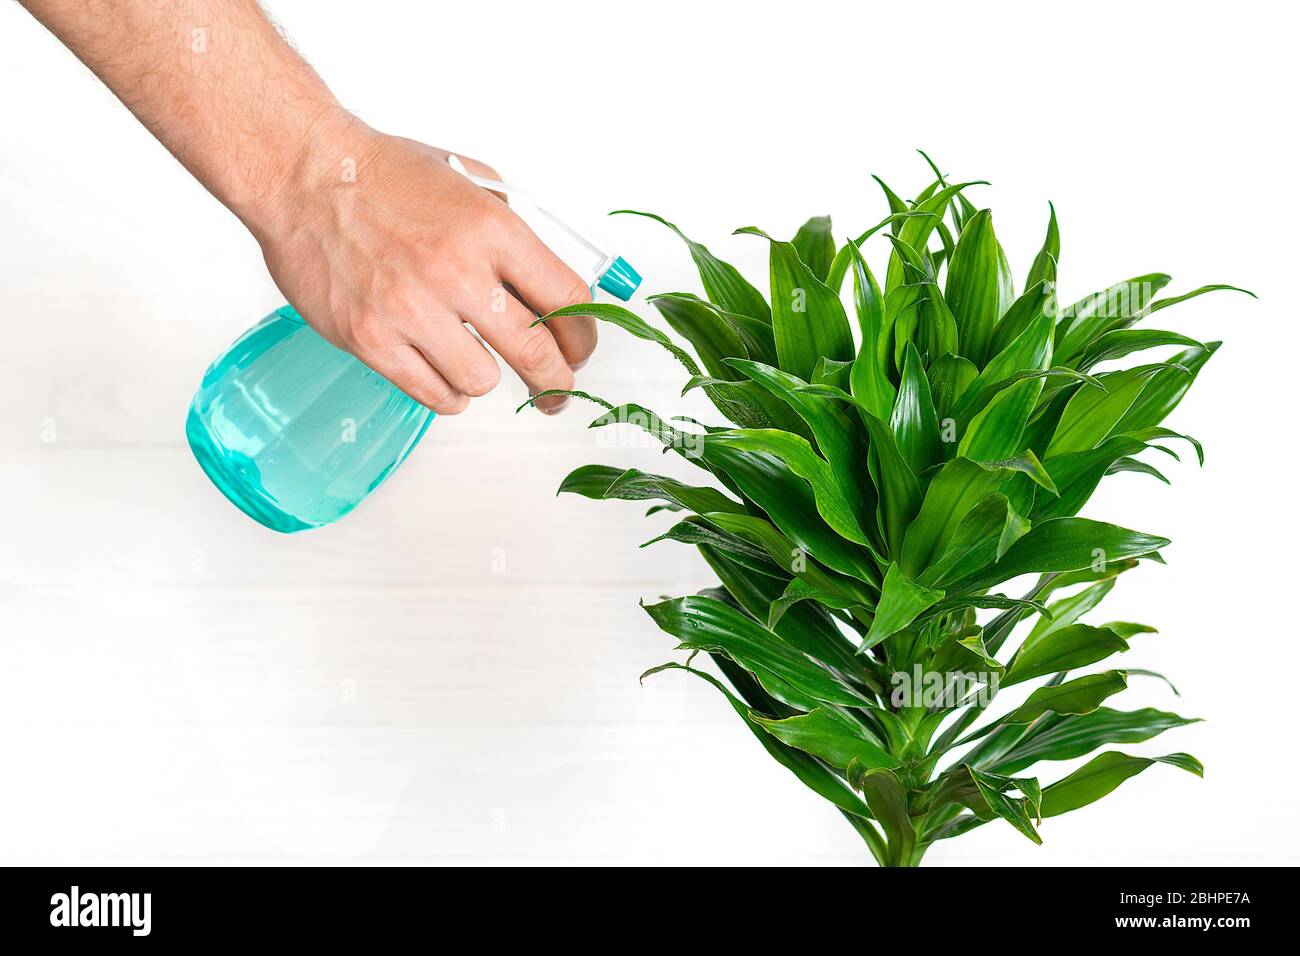 male hand holds sprayer and sprays house plant fragrant dracaena Plant care, home decor concept Stock Photo